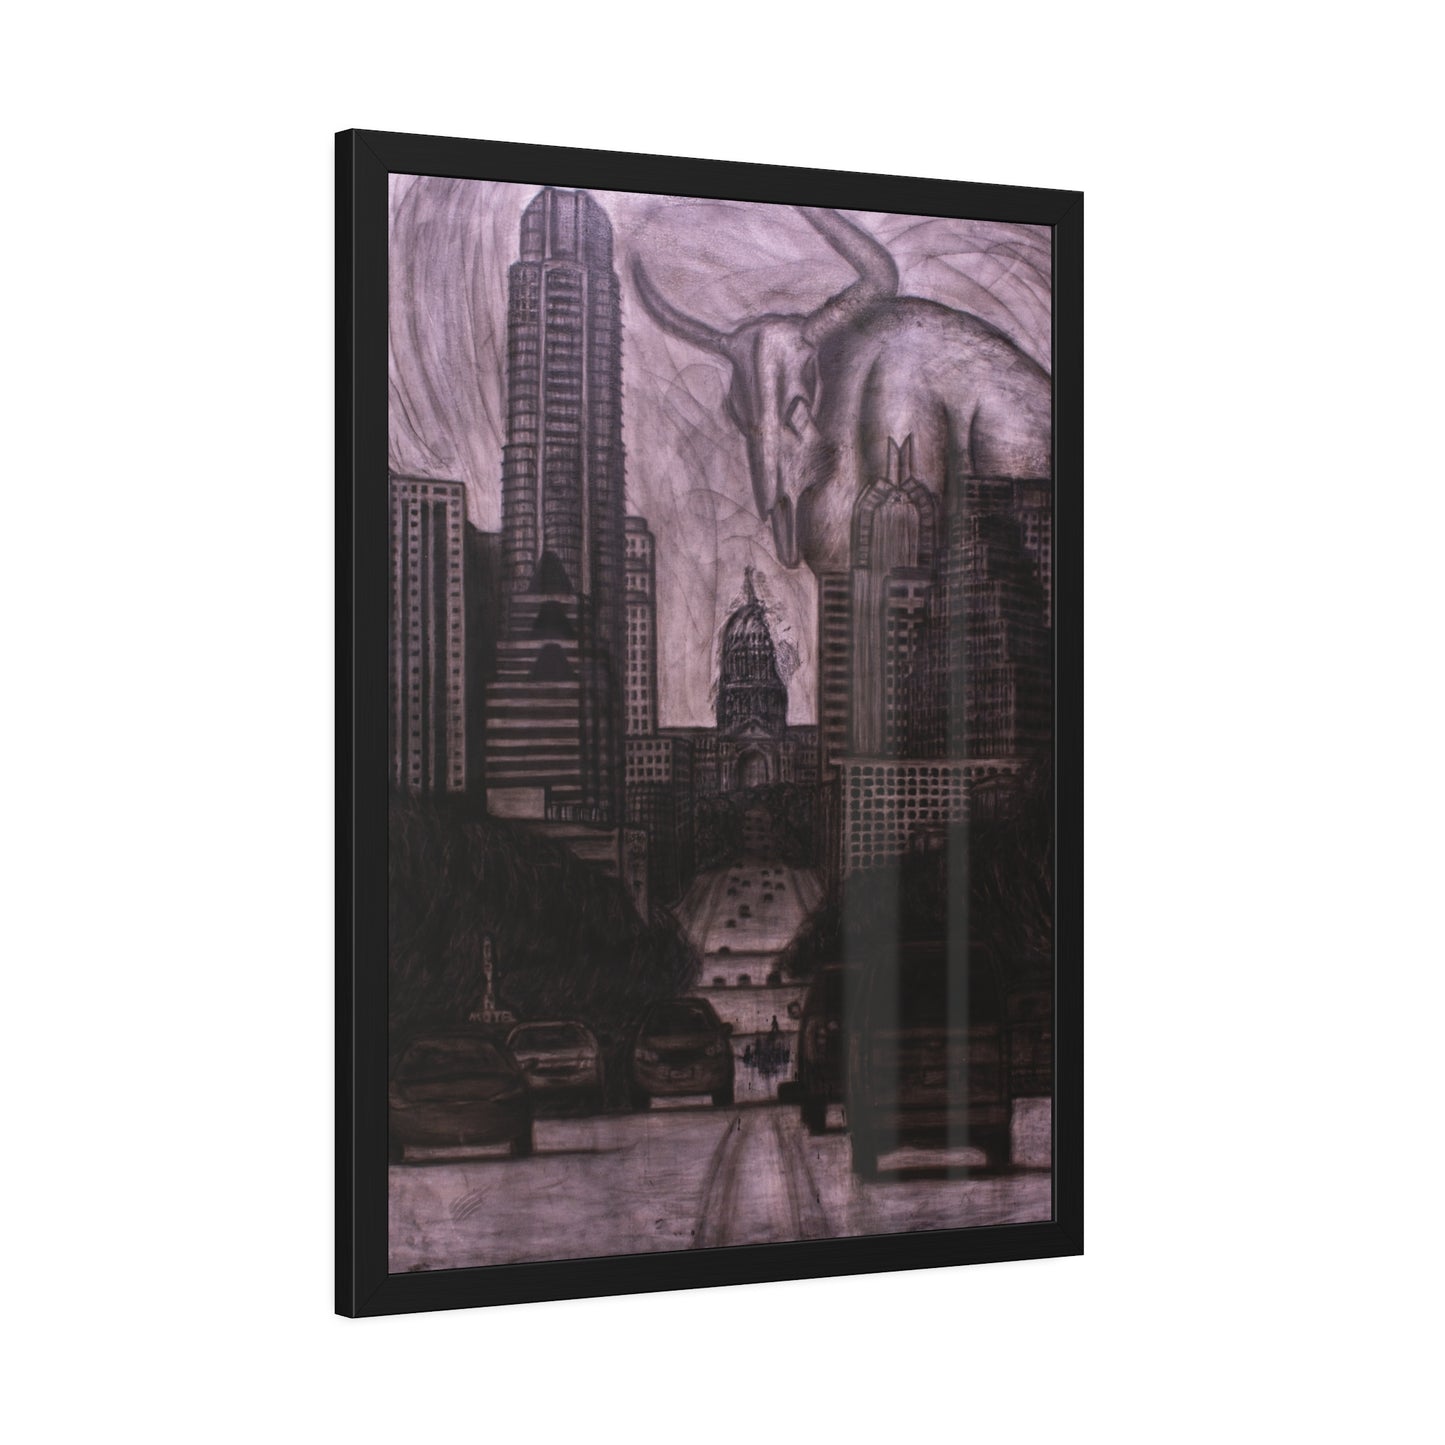 Framed "Societal Catastrophe" Print